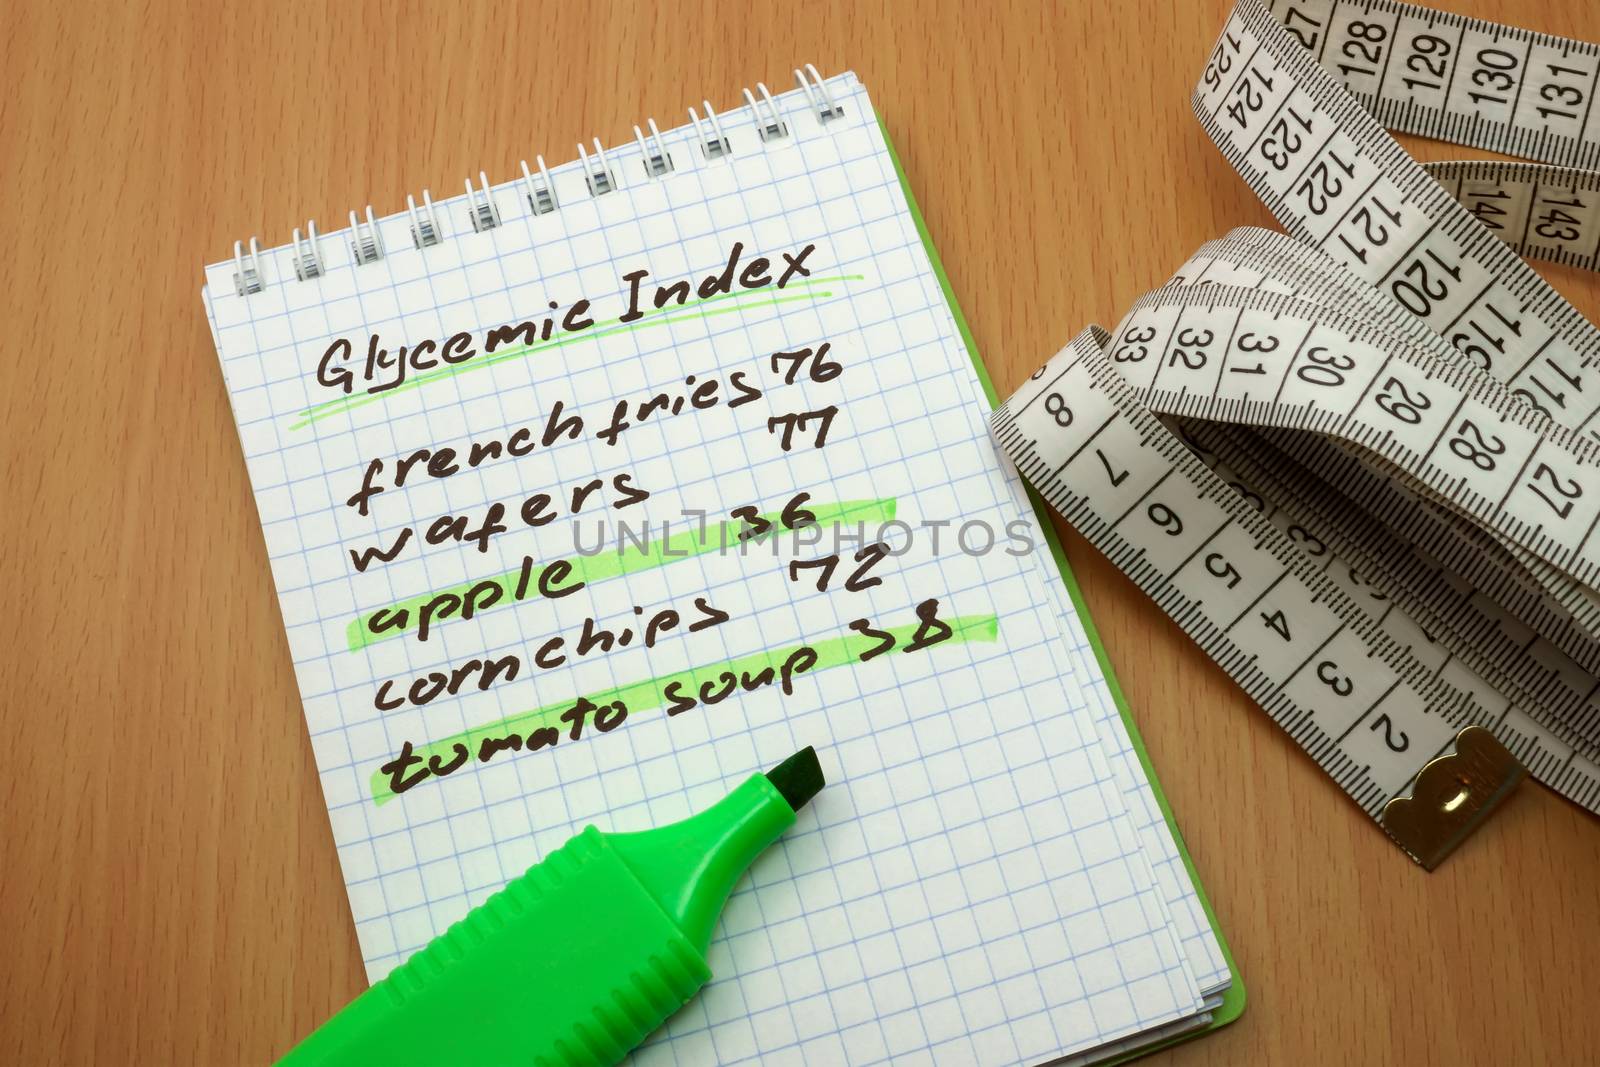 glycemic index by designer491